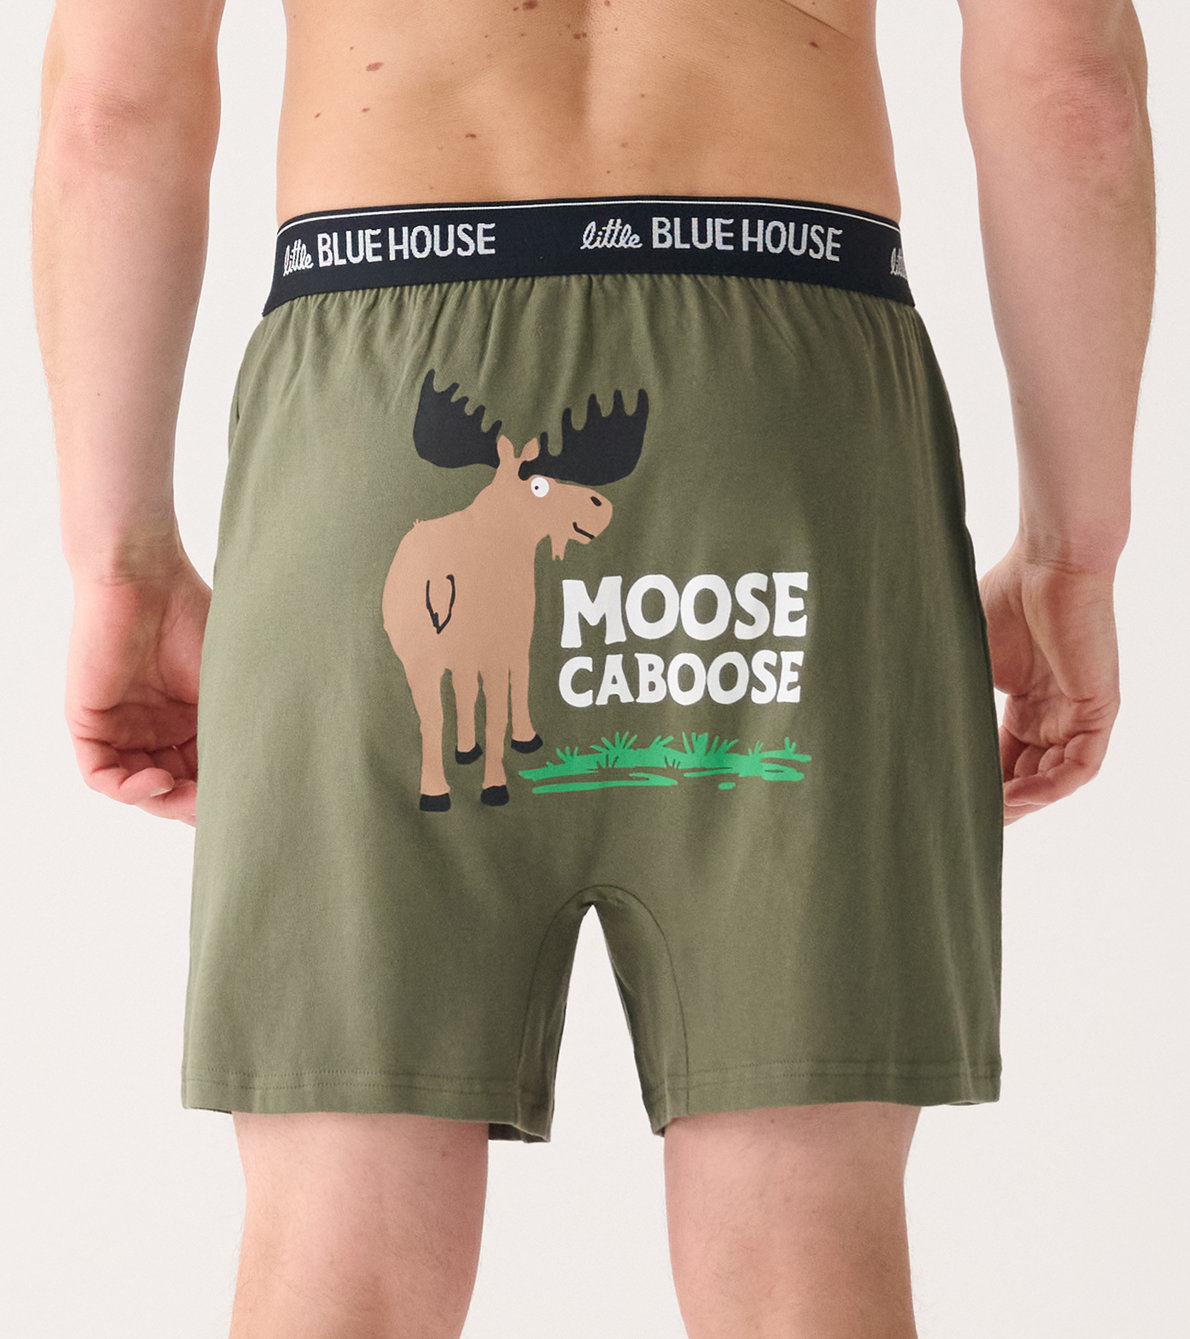 View larger image of Moose Caboose Men's Boxer Shorts